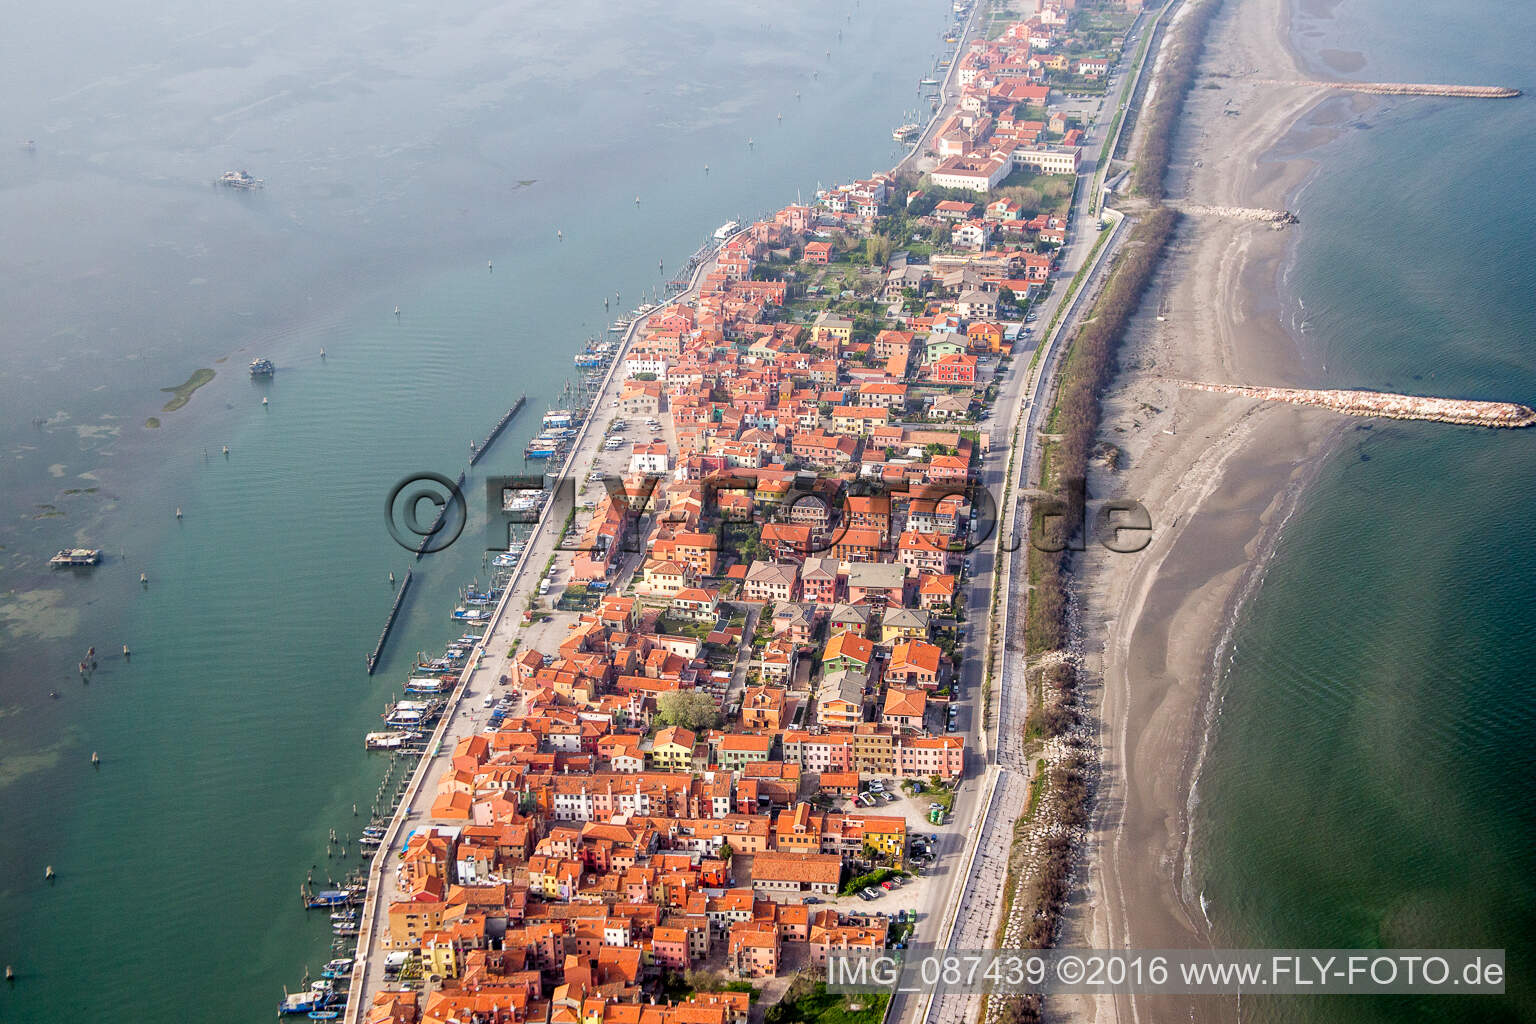 Settlement area in the district Pellestrina in Venedig in Venetien, Italy from the plane